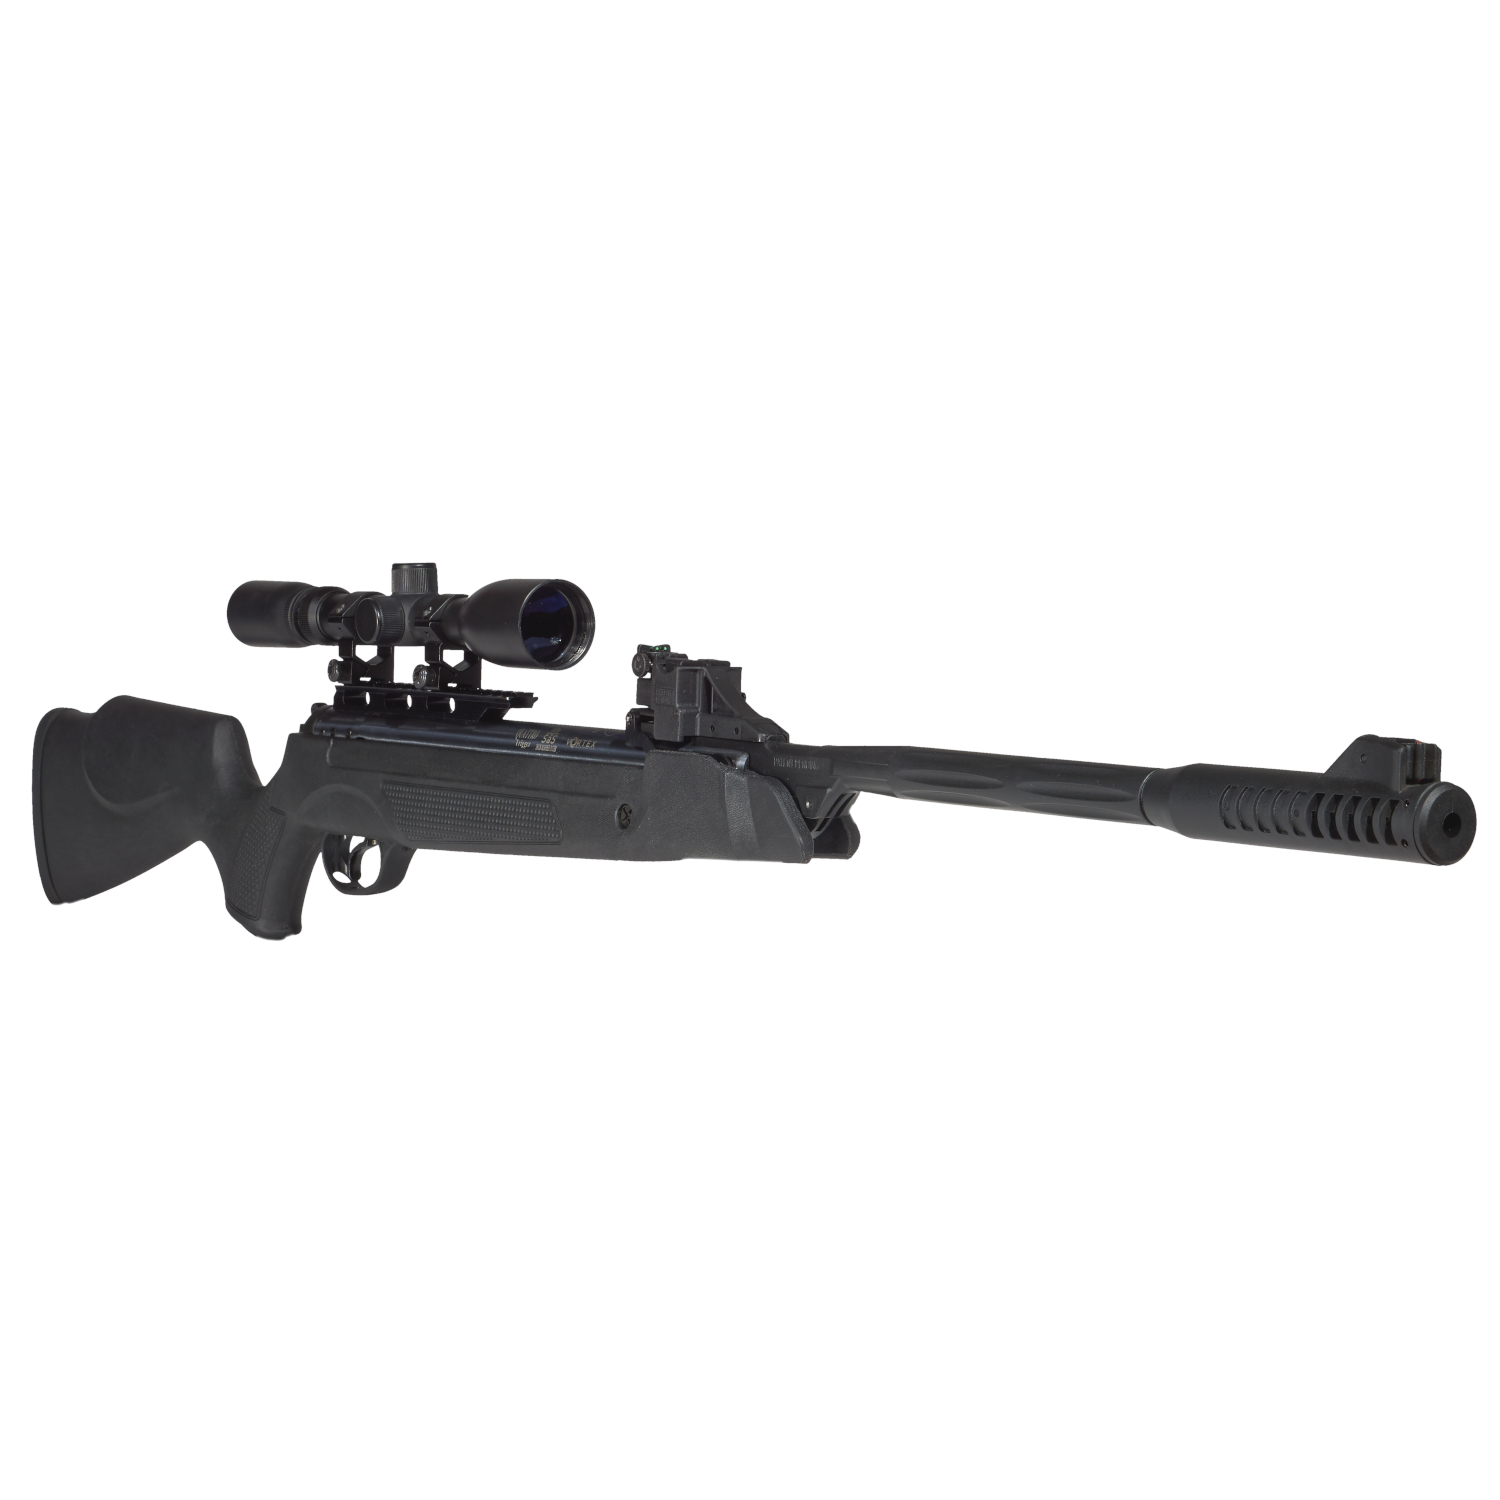 Hatsan MOD 125 Sniper Vortex QE .25 Caliber Air Rifle and Wearable4U Bundle